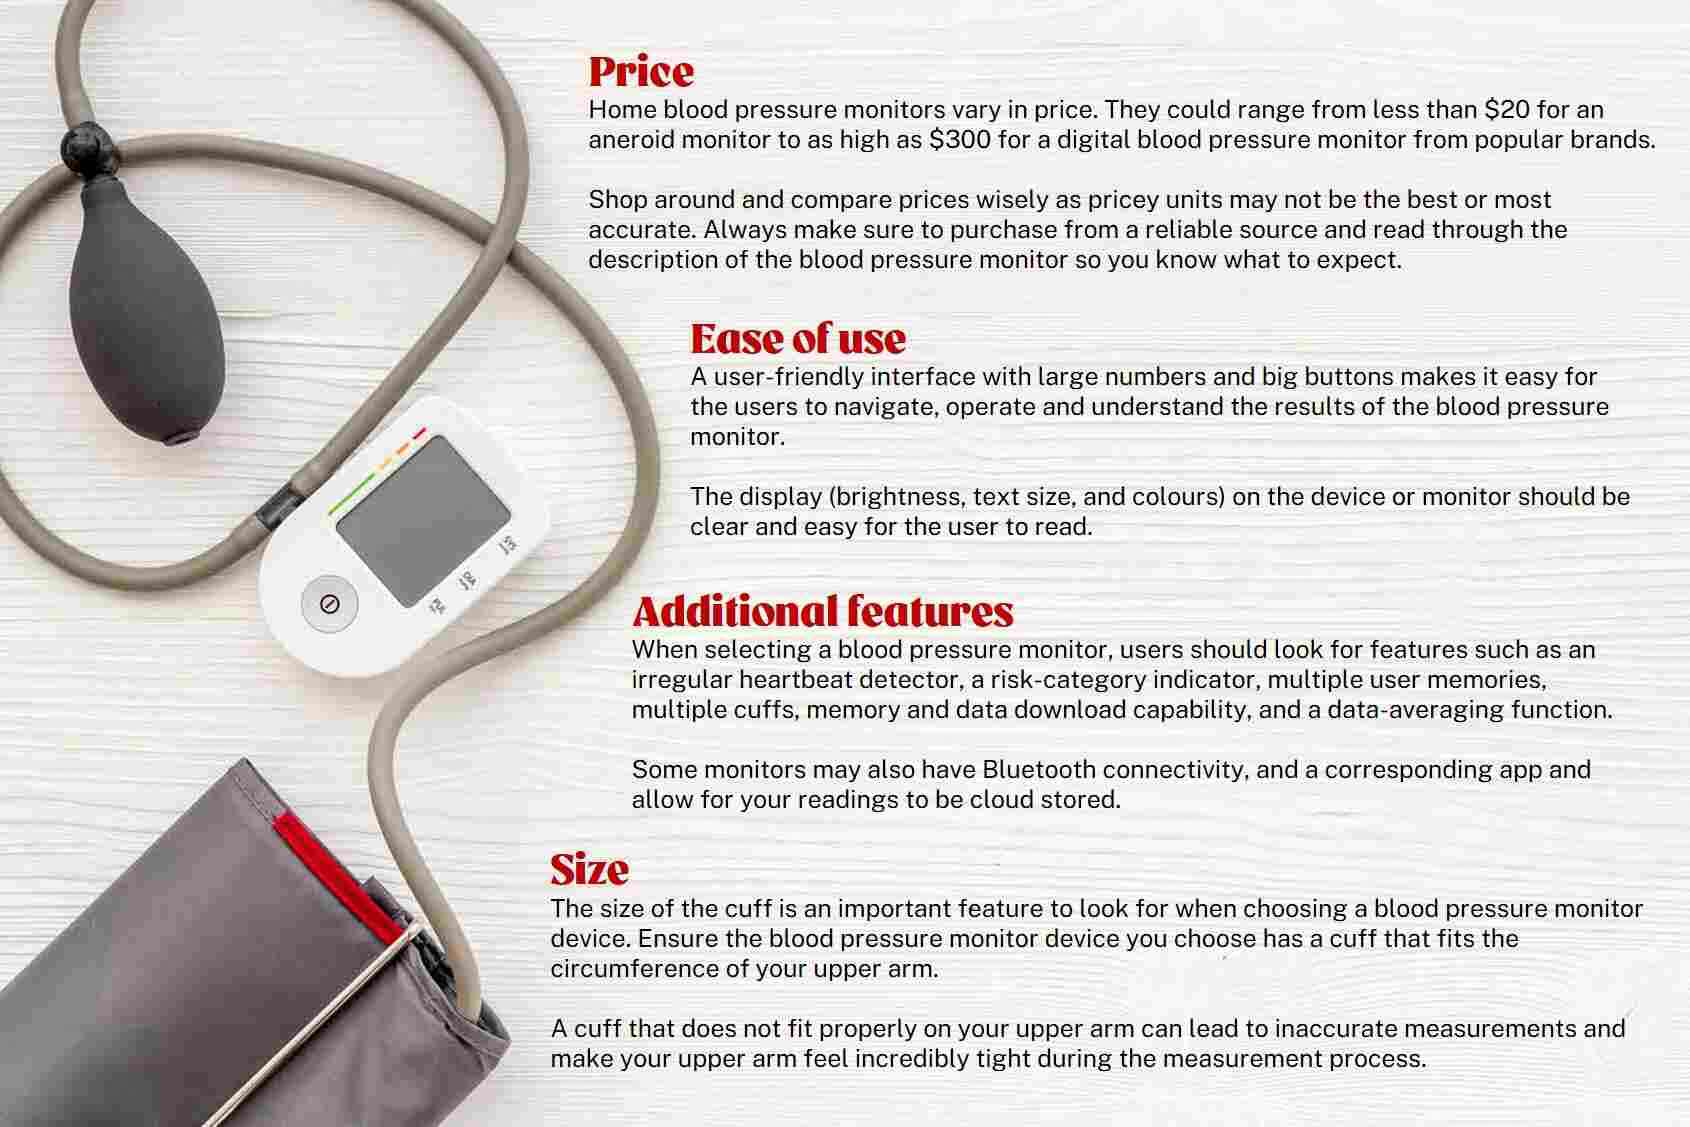 4 key factors to choosing a blood pressure monitor